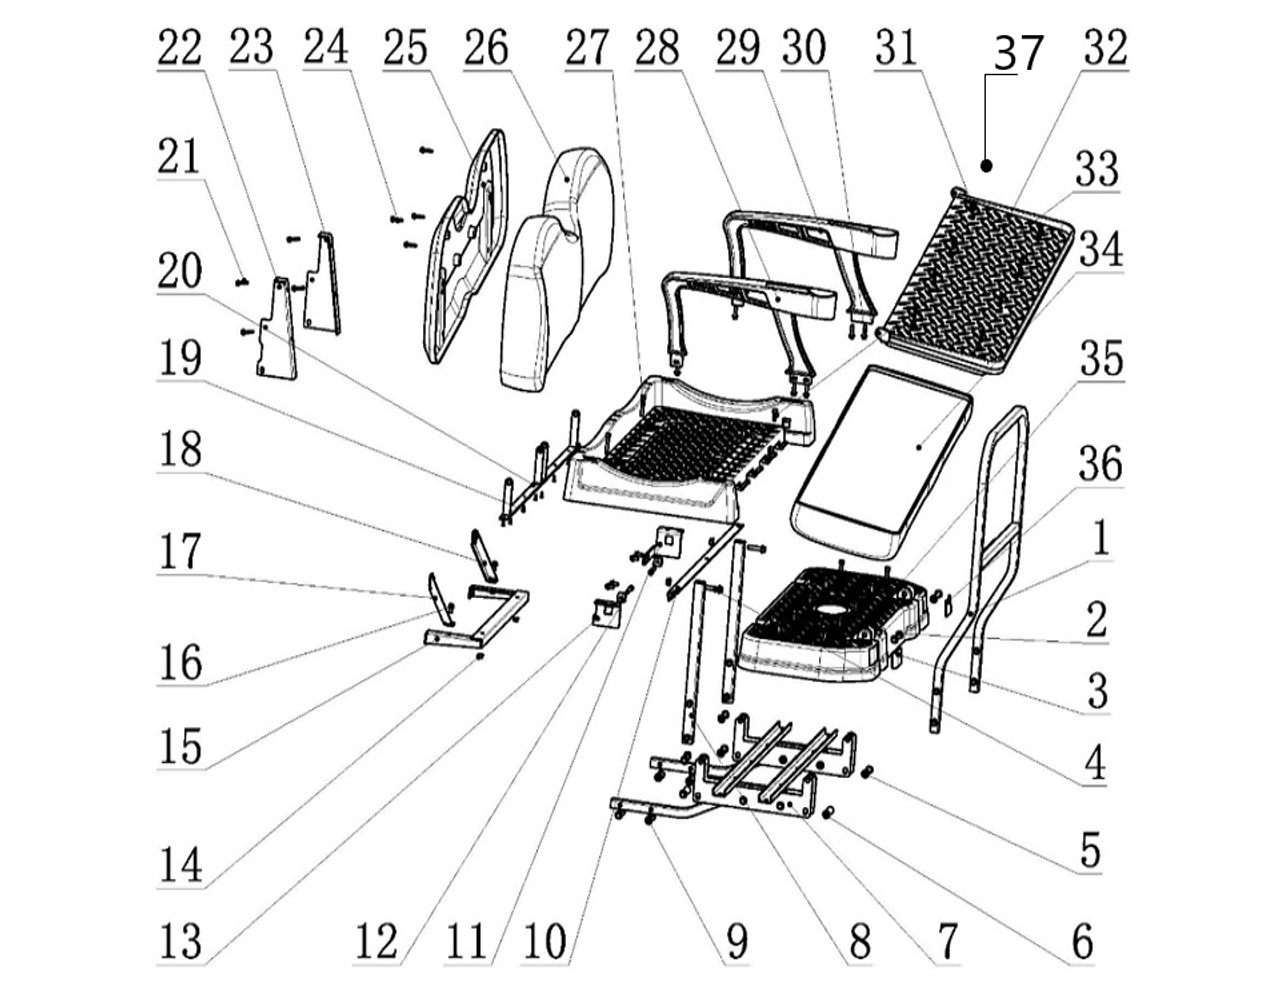 Kandi Kruiser Handrail Of Back Seat, Kandi Kruiser Hexagon flange bolt (M10×1.25×90), Kandi Kruiser Retro-Reflection, Driver, Kandi Kruiser Hex flange bolt (M10×1.25×45), Kandi Kruiser Hexagon flange nut (M10×1.25), Kandi Kruiser Hex flange bolt (M10×1.25×70), Kandi Kruiser Footboard Stringer Assembly, Kandi Kruiser Back-Beam Crutch Of Rear Seat, Kandi Kruiser Hex flange bolt (M10×1.25×50), Kandi Kruiser Back-Beam Of Rear Seat, Kandi Kruiser Armrest Of Back Seat Bracket, Passenger